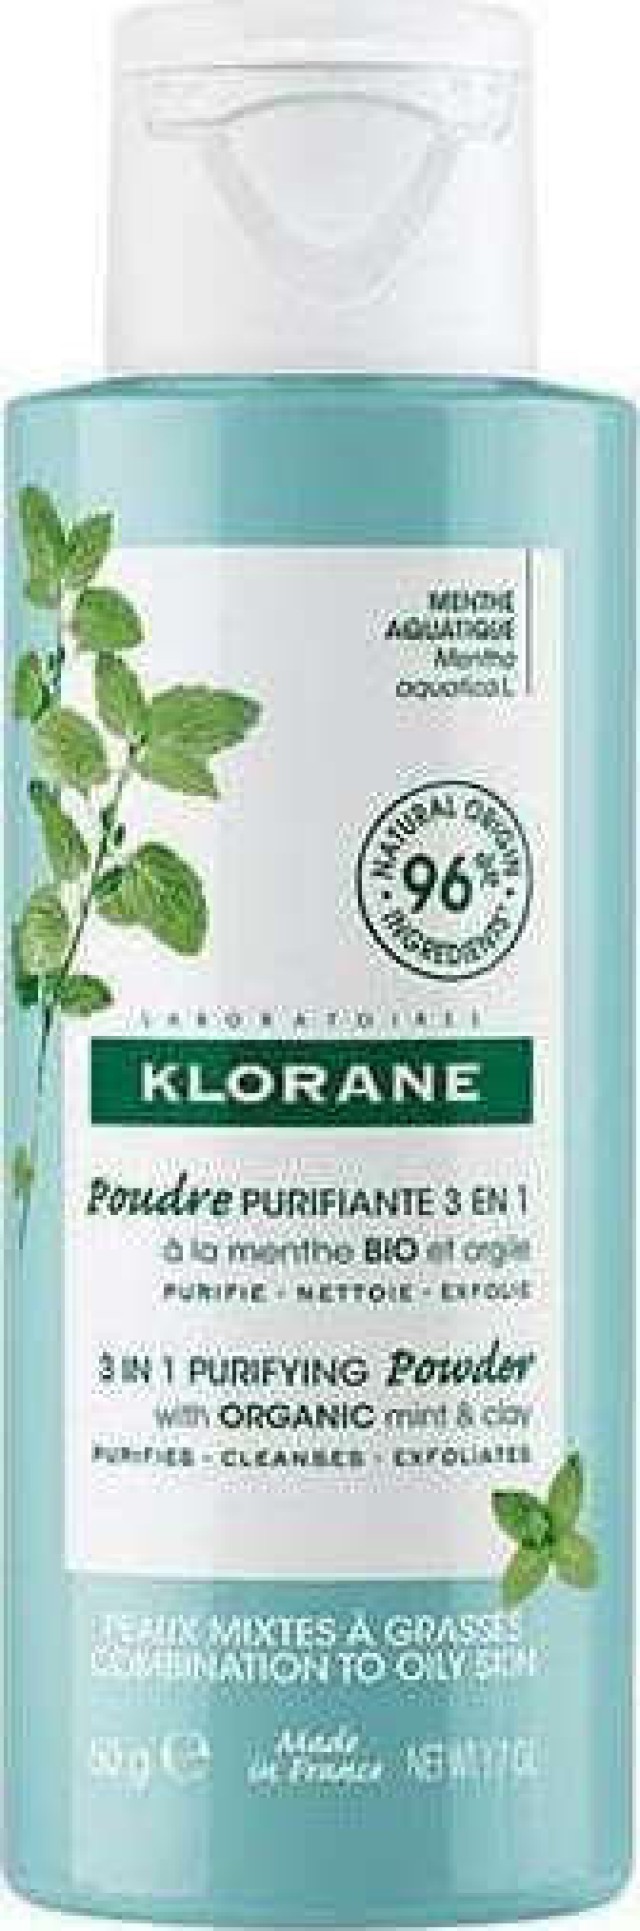 Klorane Aquatic Mint 3 in 1 Purifying Powder Καθαριστική Πούδρα Με Υδάτινη Μέντα ΒΙΟ & Άργιλο Για Μικτό - Λιπαρό Δέρμα 50gr